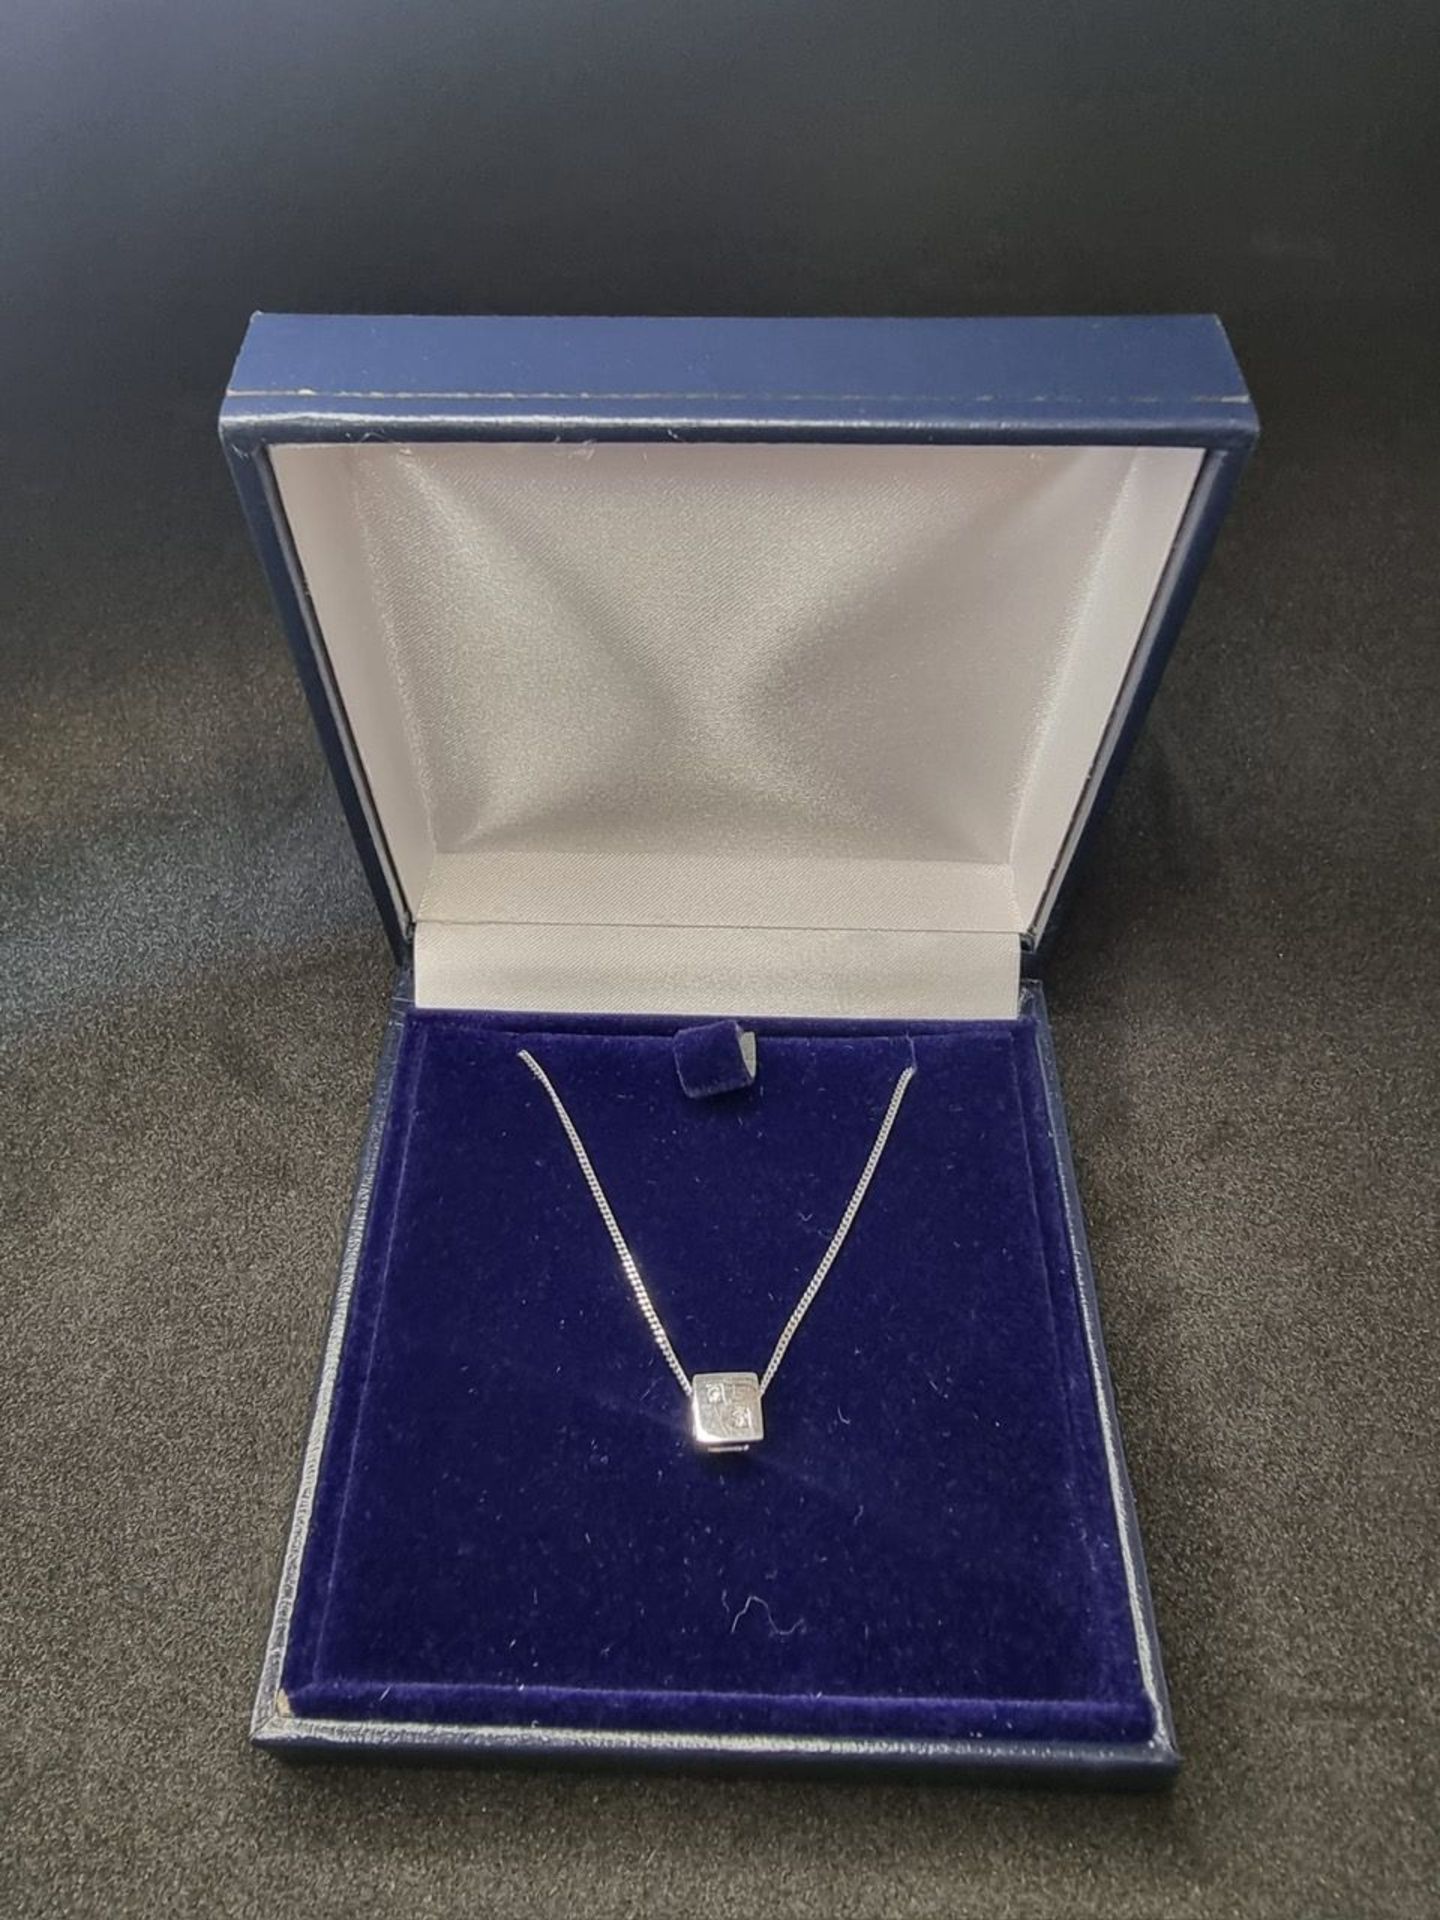 Gorgeous 18 Carat White Gold Necklace with 0.9 Carat Diamond Pendant - Image 2 of 2